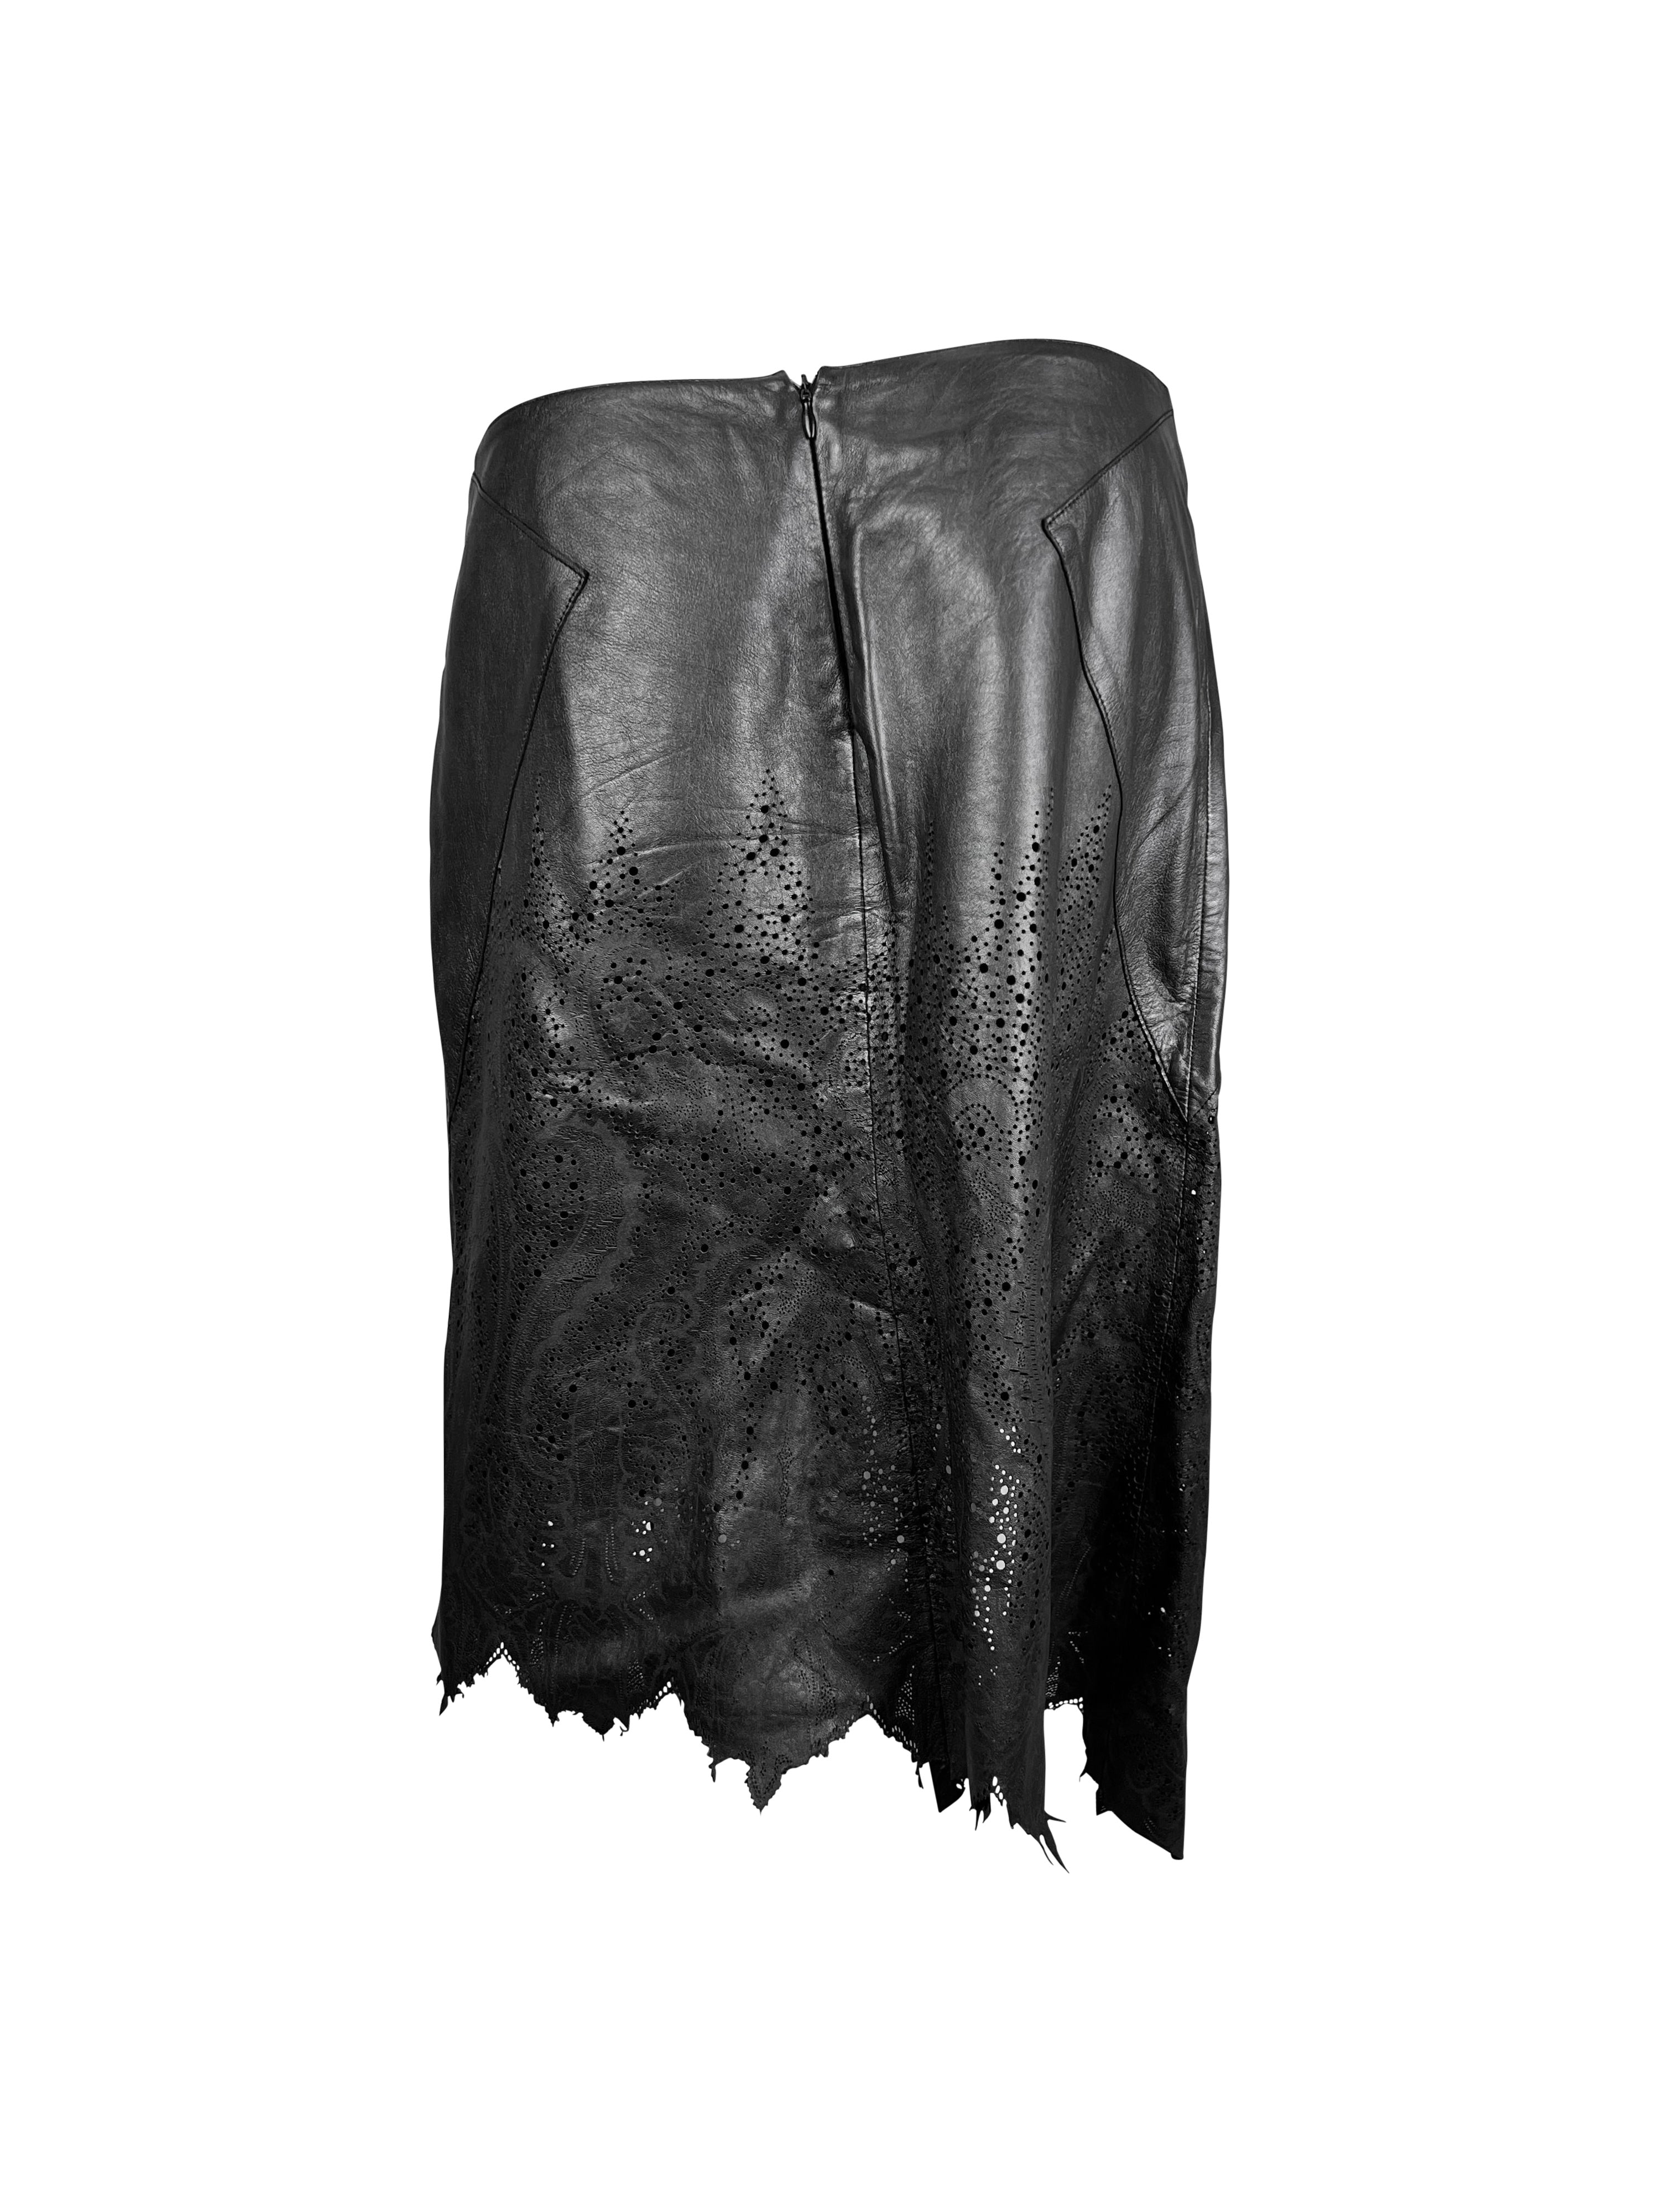 Roberto Cavalli Fall 2001 Leather Skirt